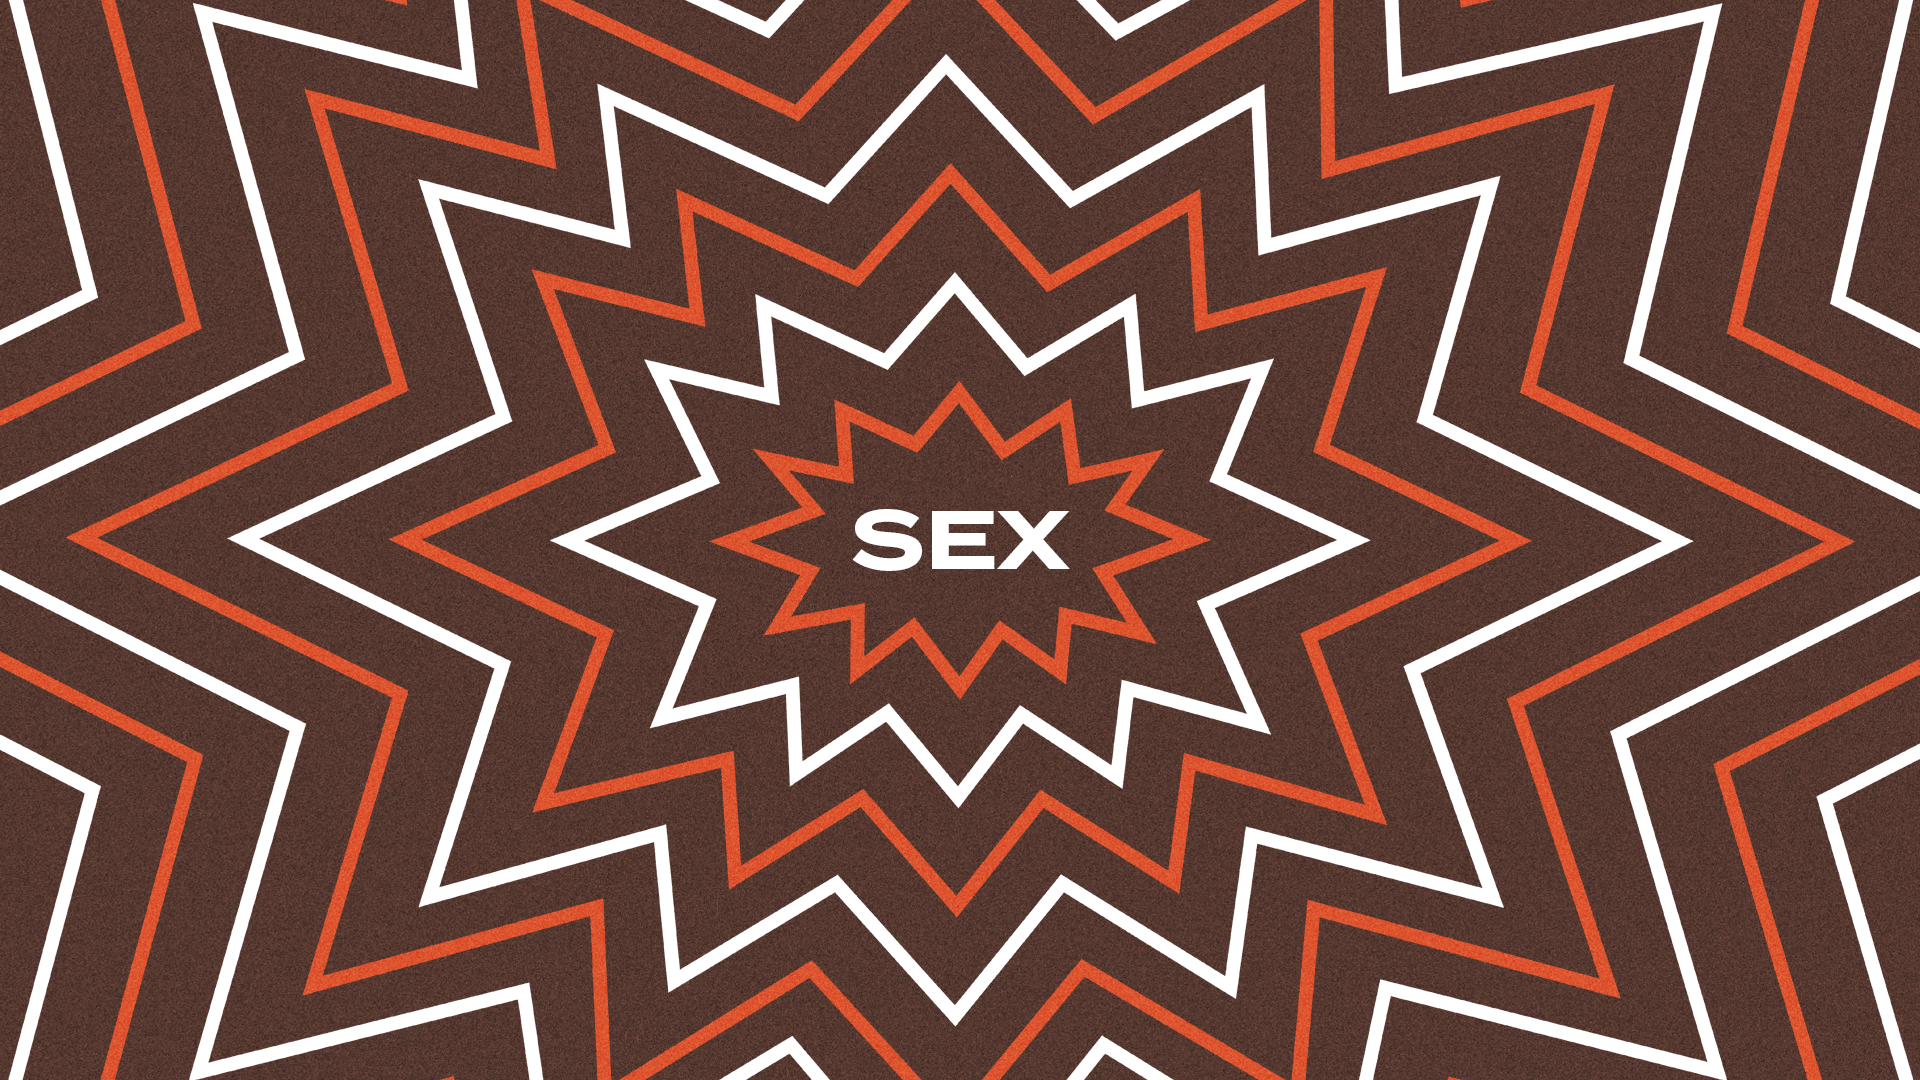 Sermon Graphic on Sex